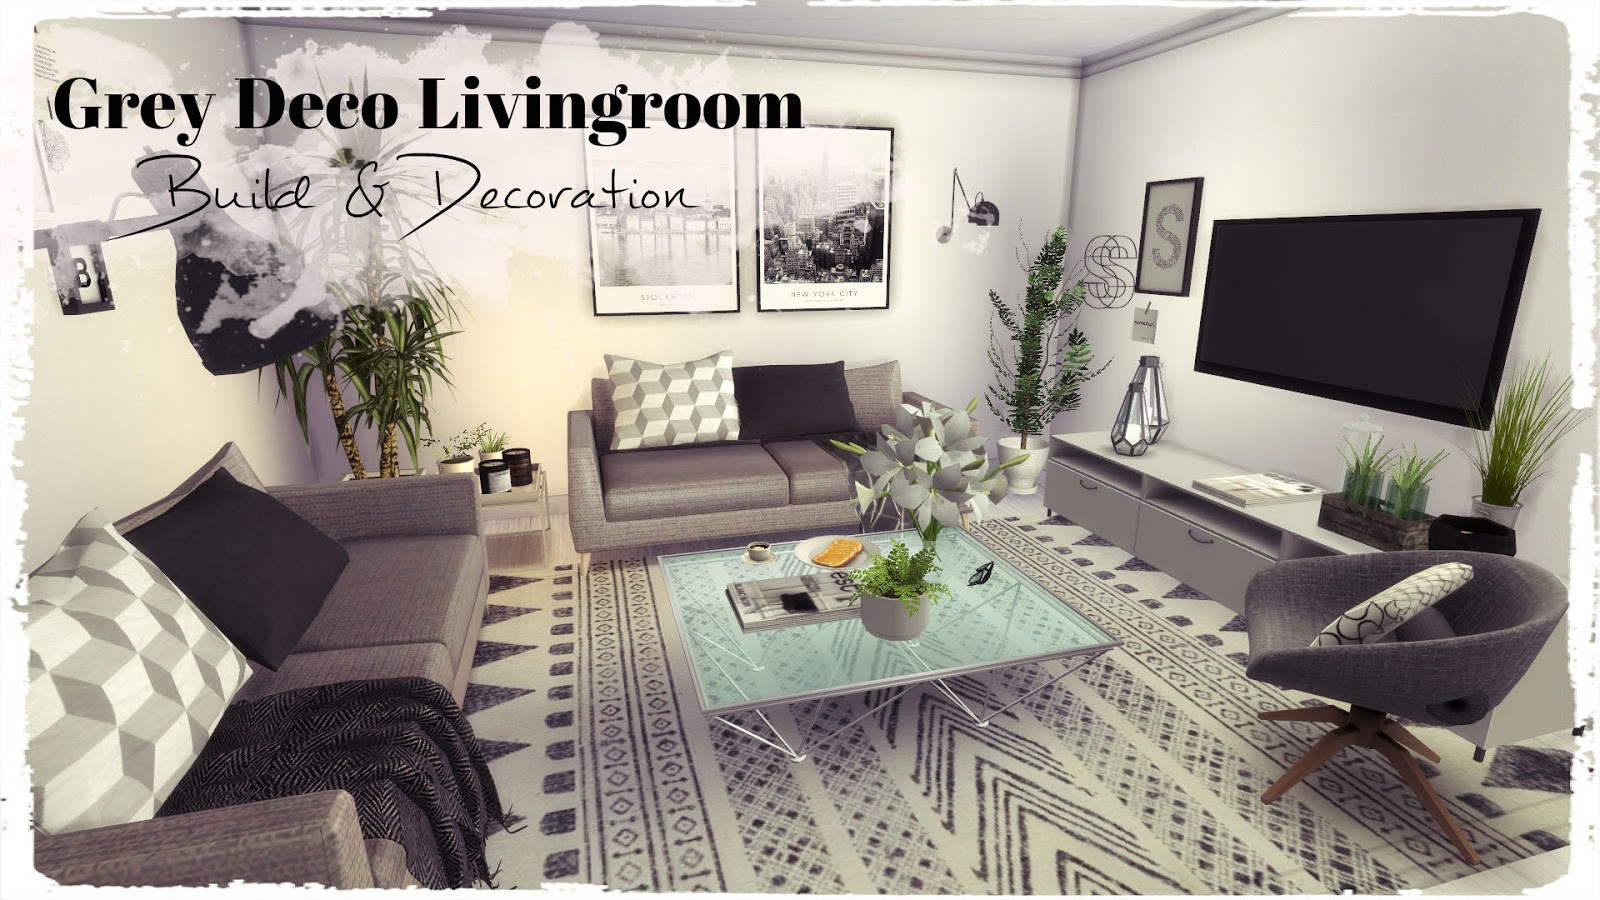 Sims 4 Living Room Ideas
 Sims 4 Grey Deco Livingroom Build & Decoration for